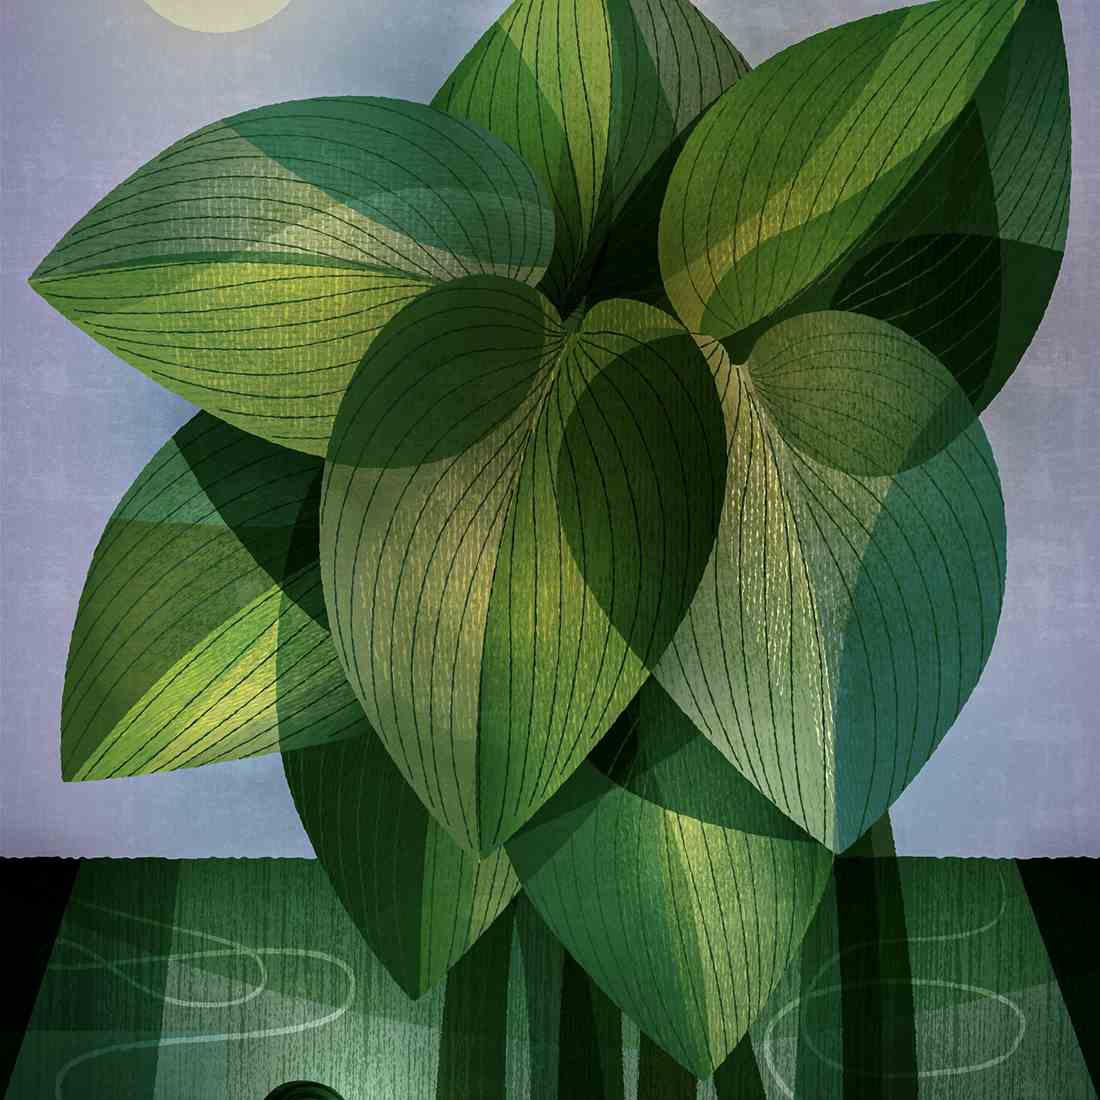 Paul Wearing: Gardens Illustrated April